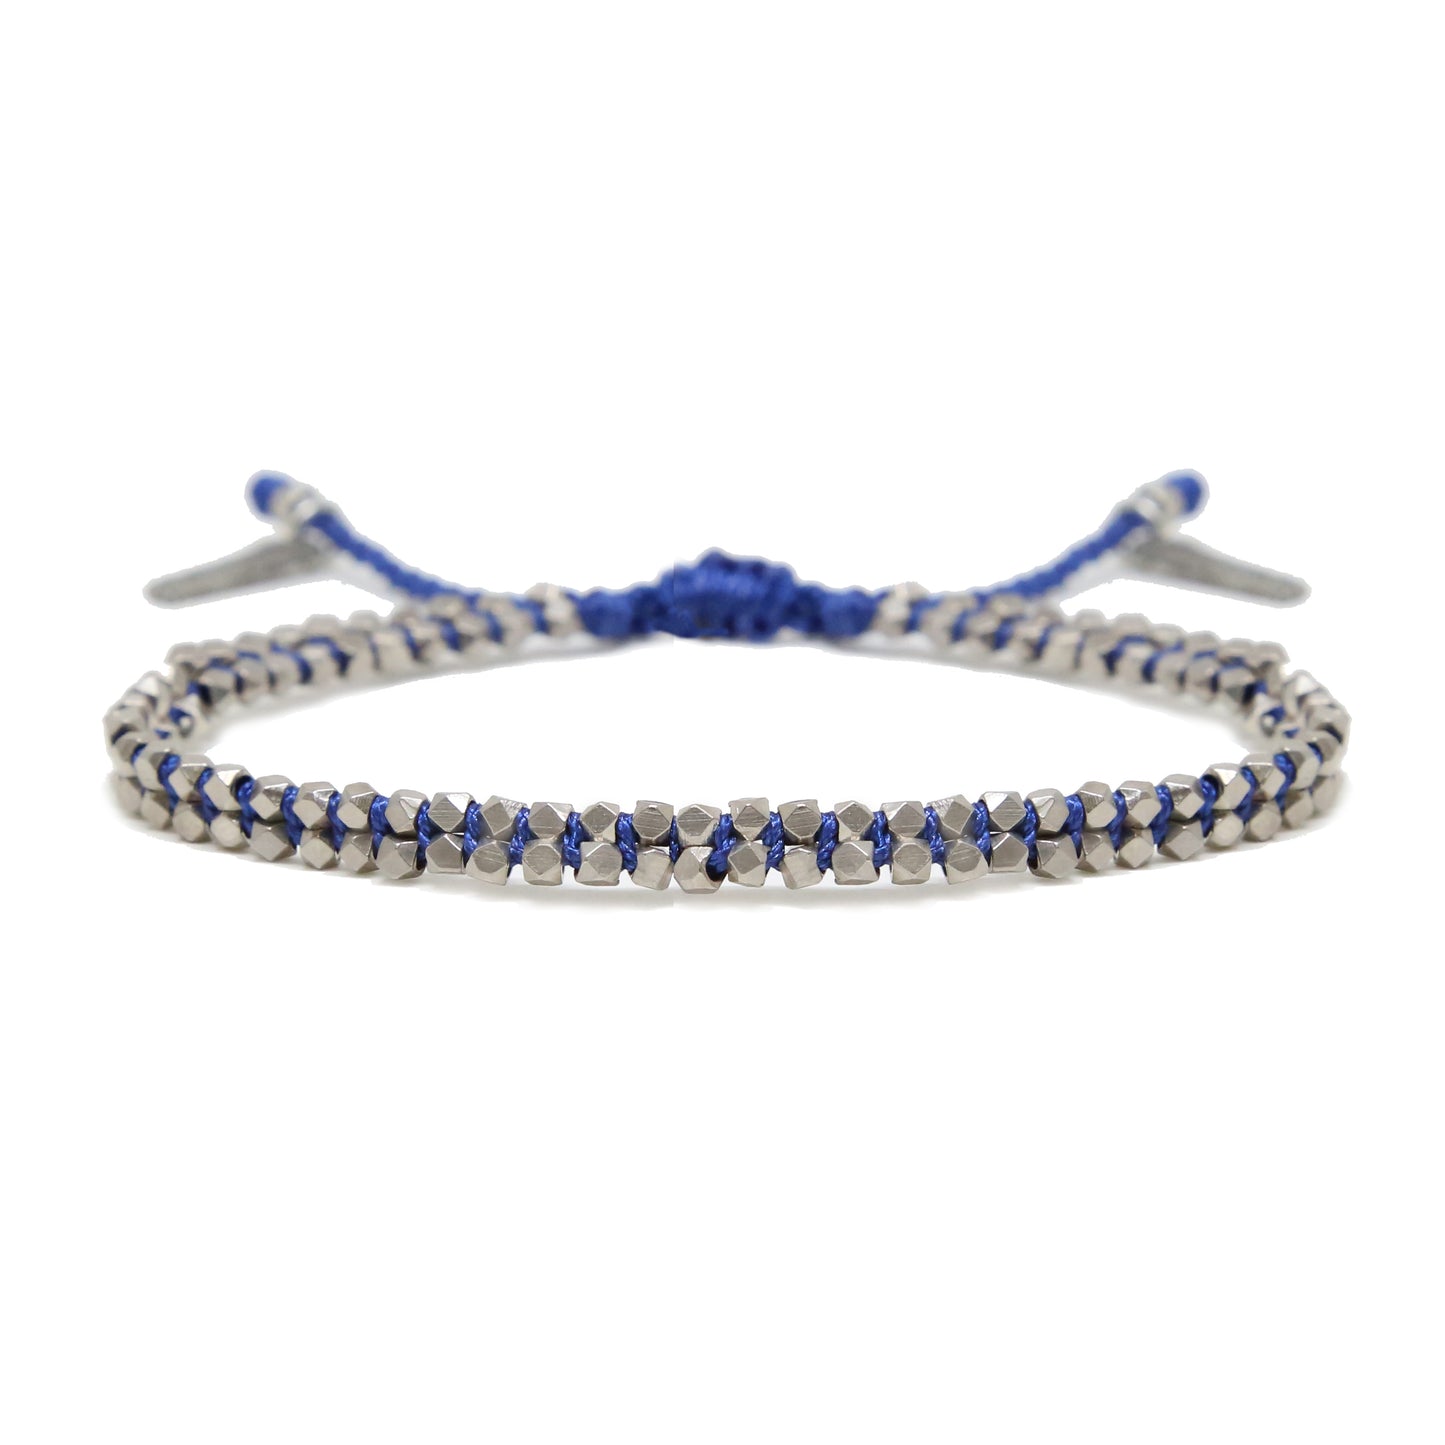 Salt Water Bracelet in Blue and Silver Ox